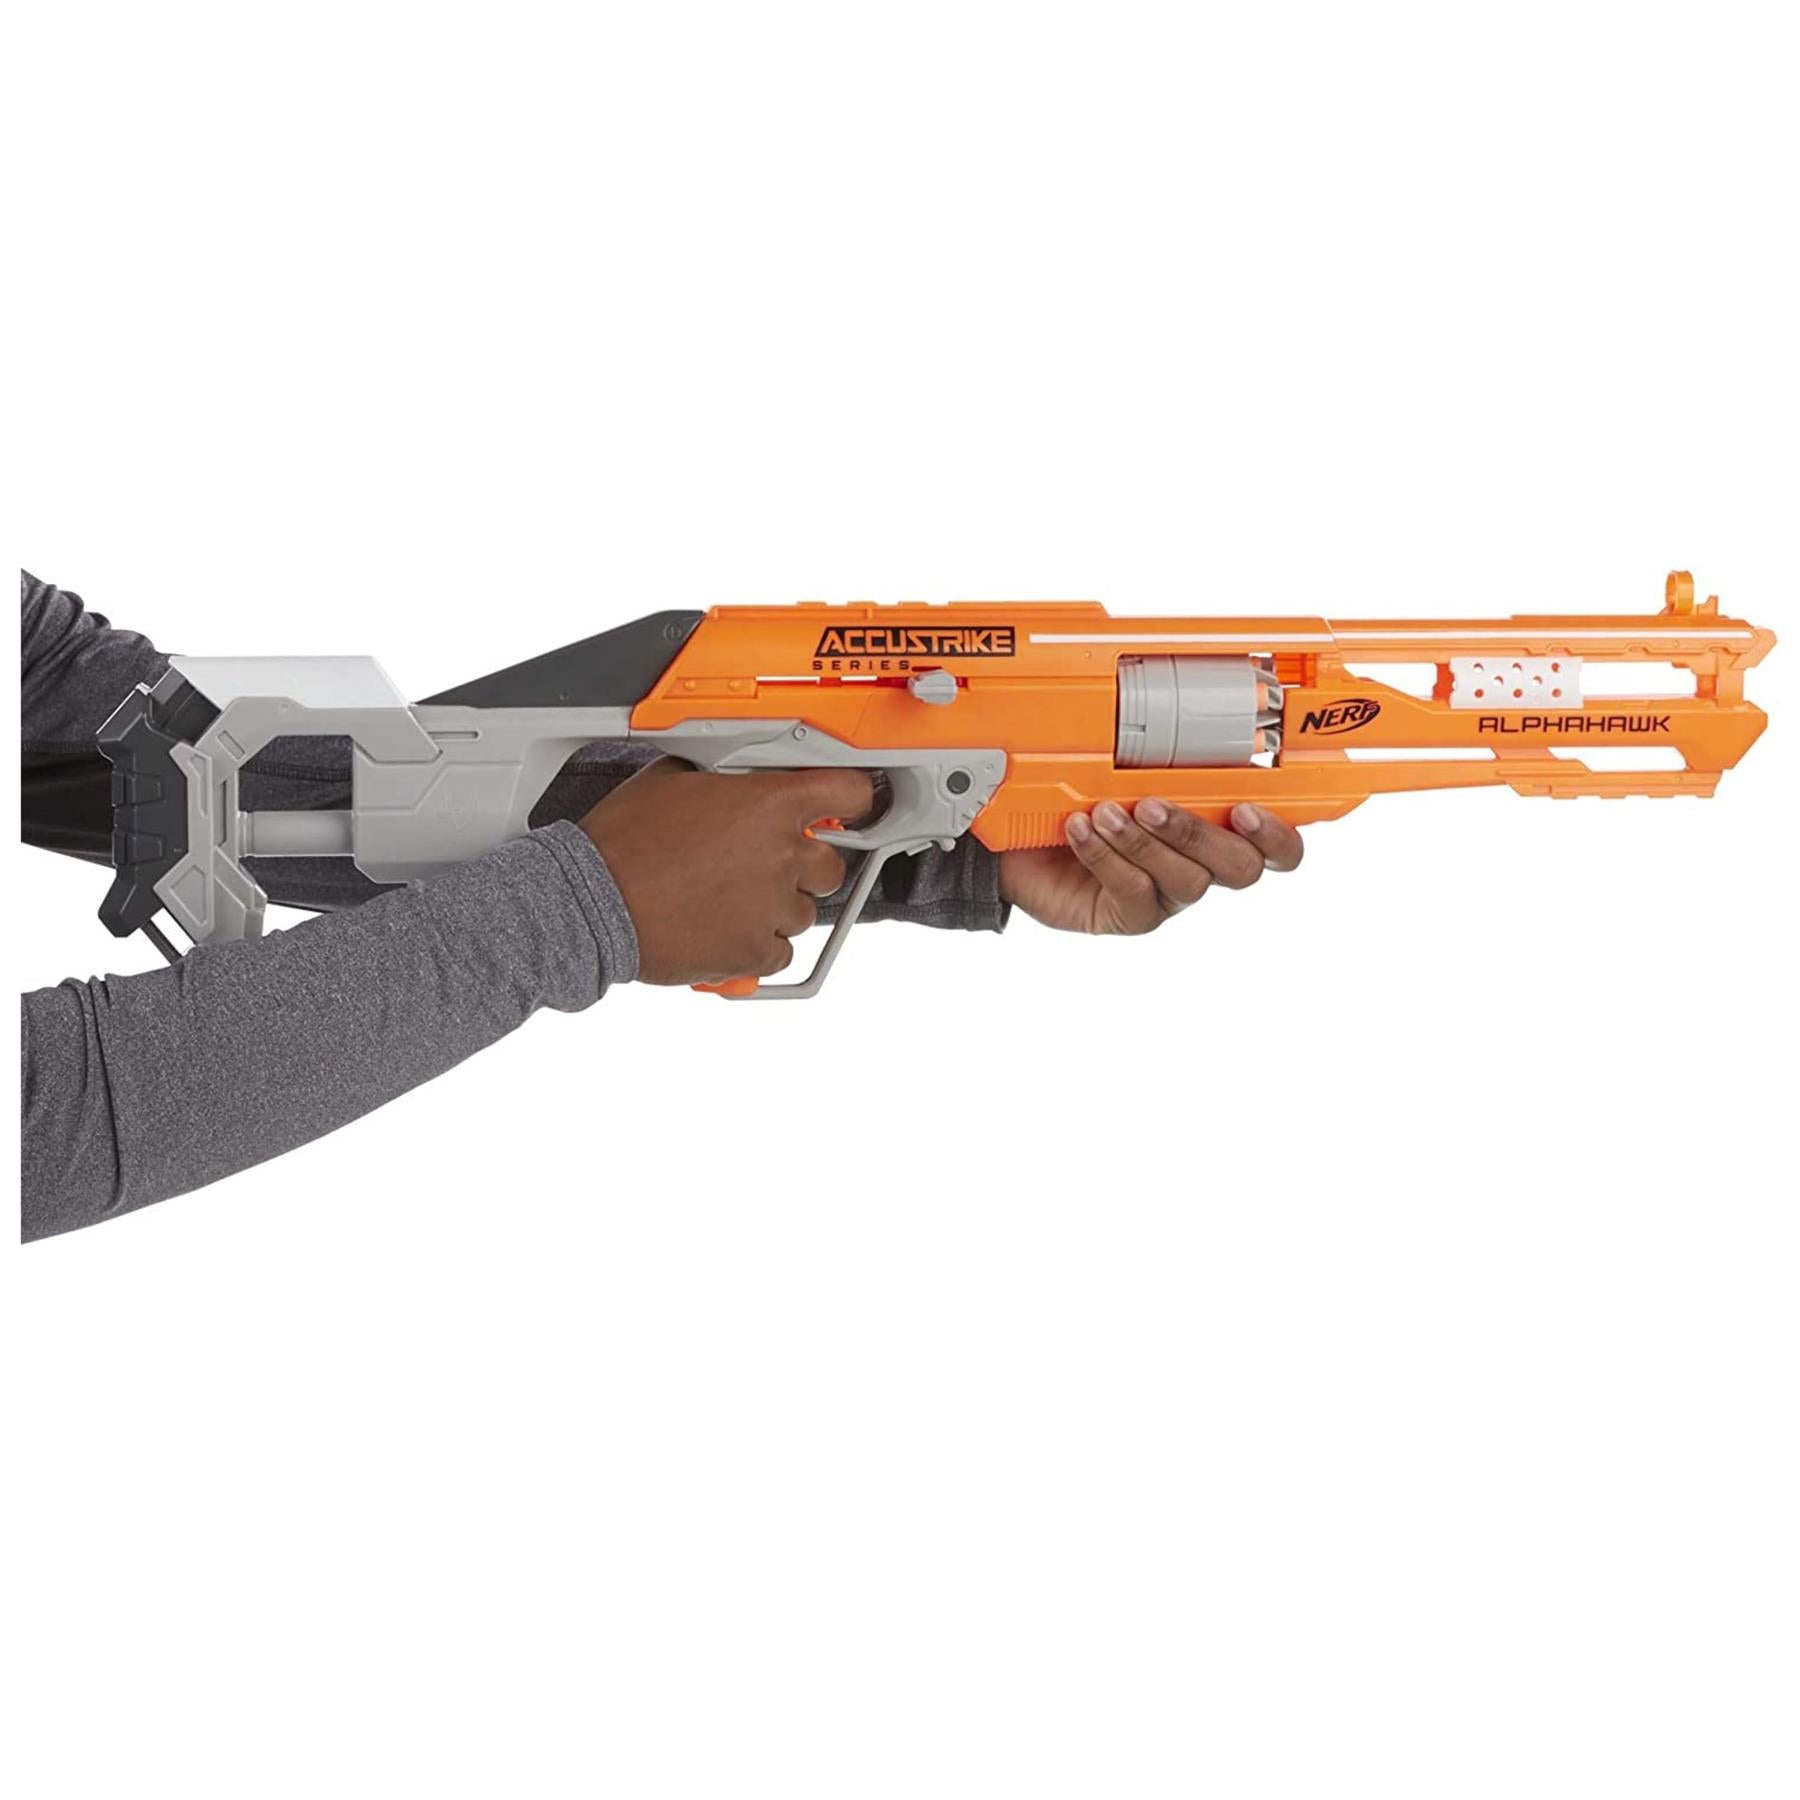 Nerf N-Strike Elite Accu Series AlphaHawk Blaster Dart Gun by Nerf - UKBuyZone